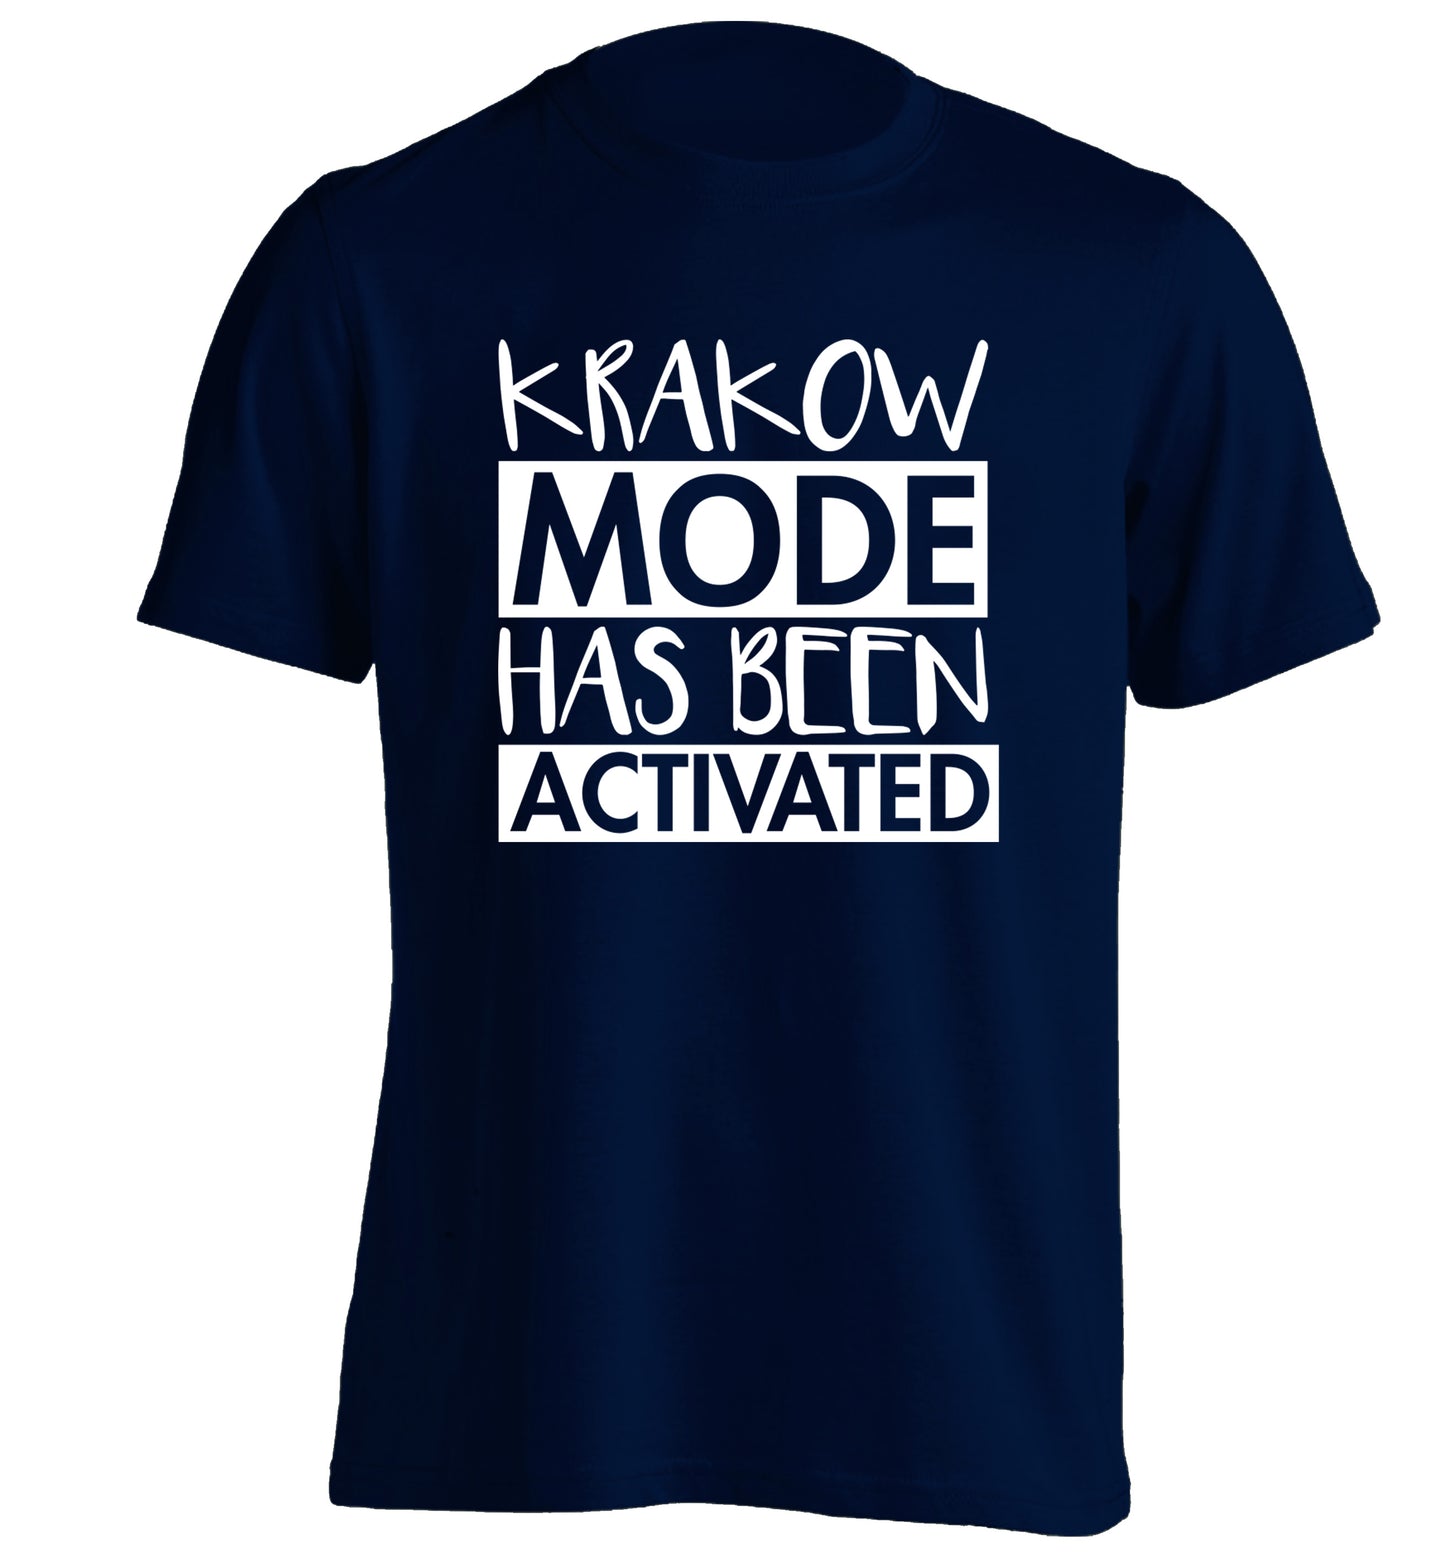 Krakow mode has been activated adults unisex navy Tshirt 2XL